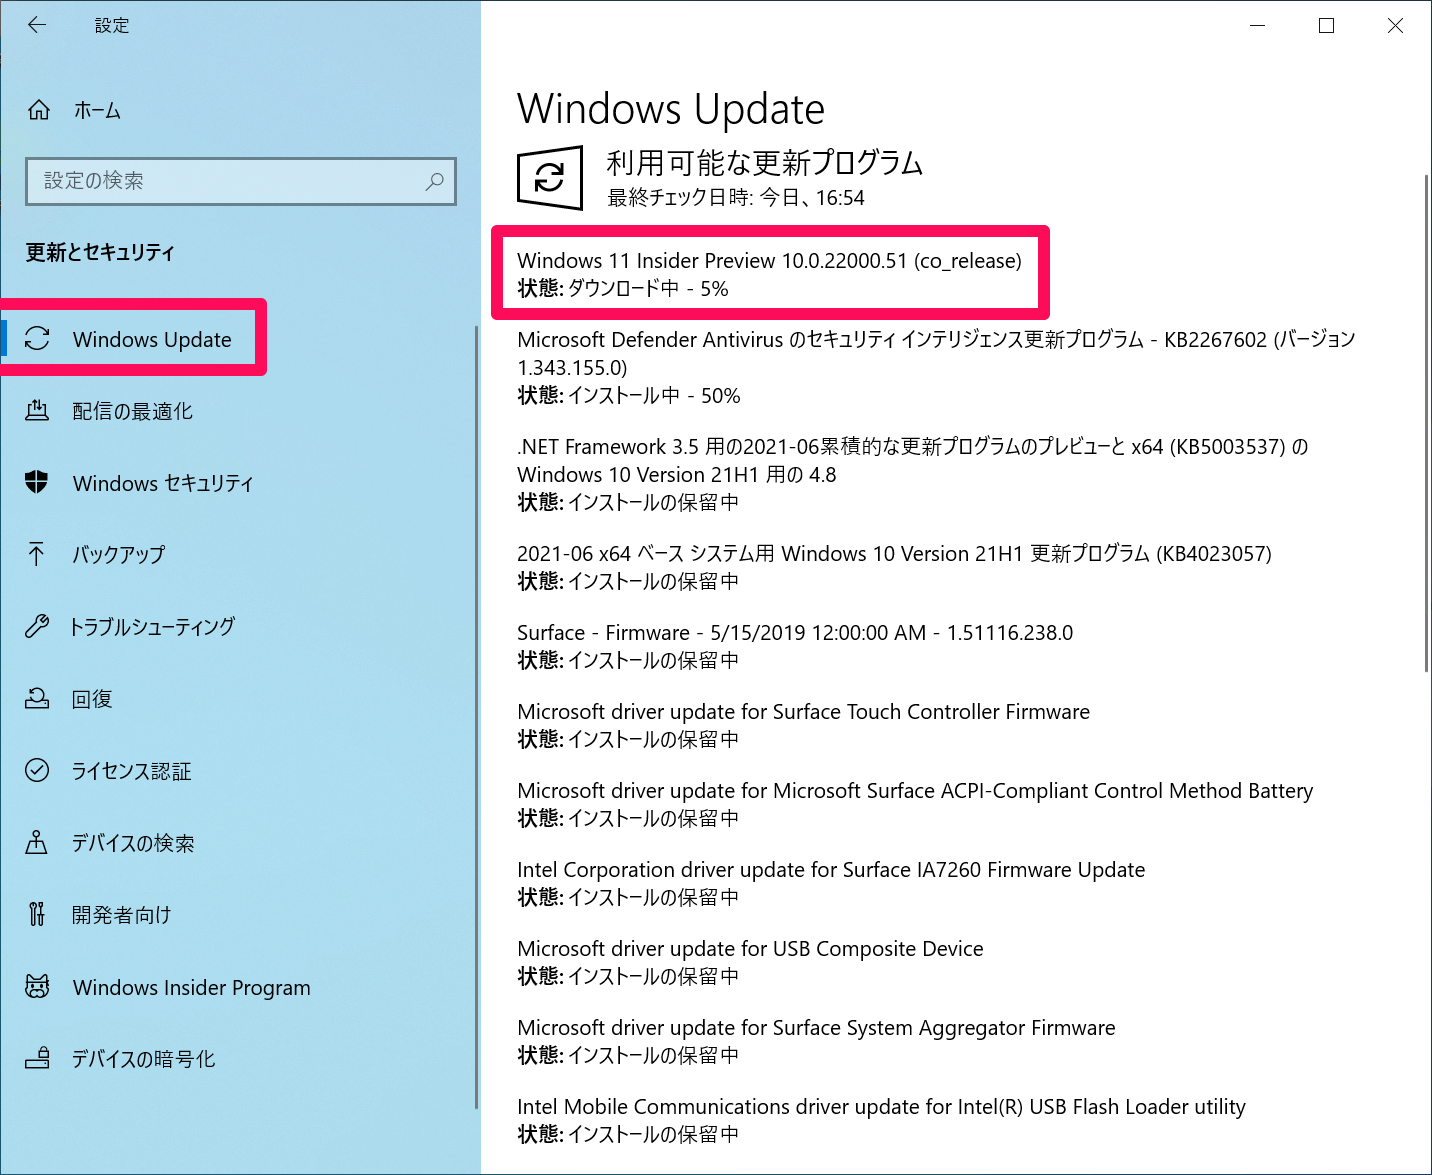 Windows 11のプレビュー版をインストールする方法。Devチャネル登録済みのWindows 10からアップグレード